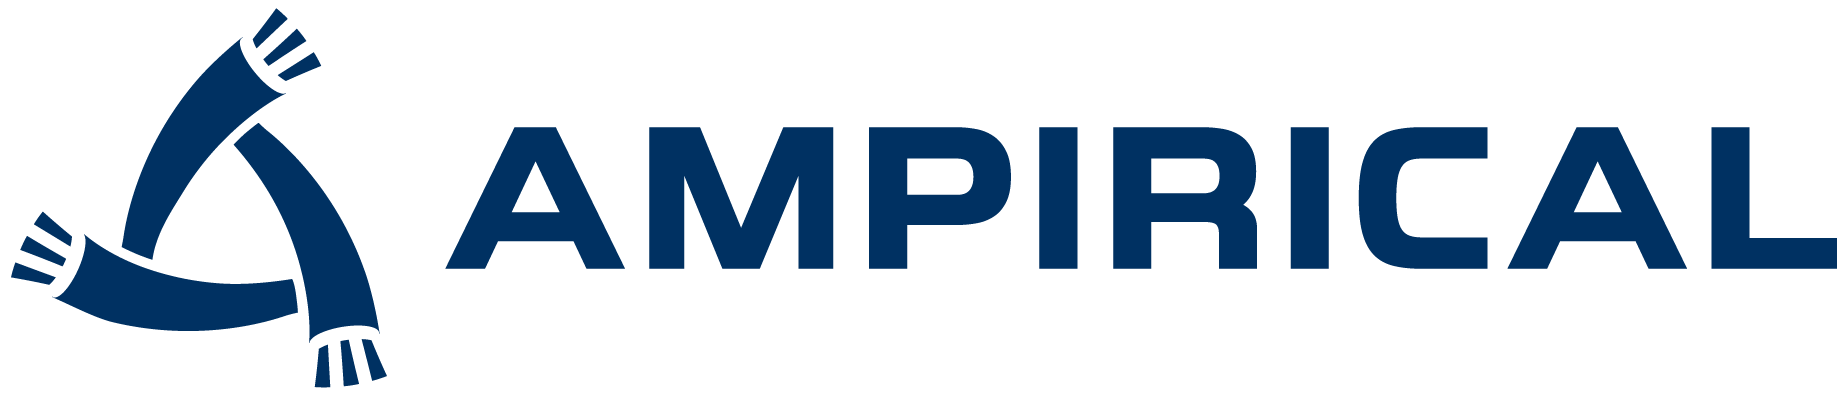 Ampirical Solutions LLC logo